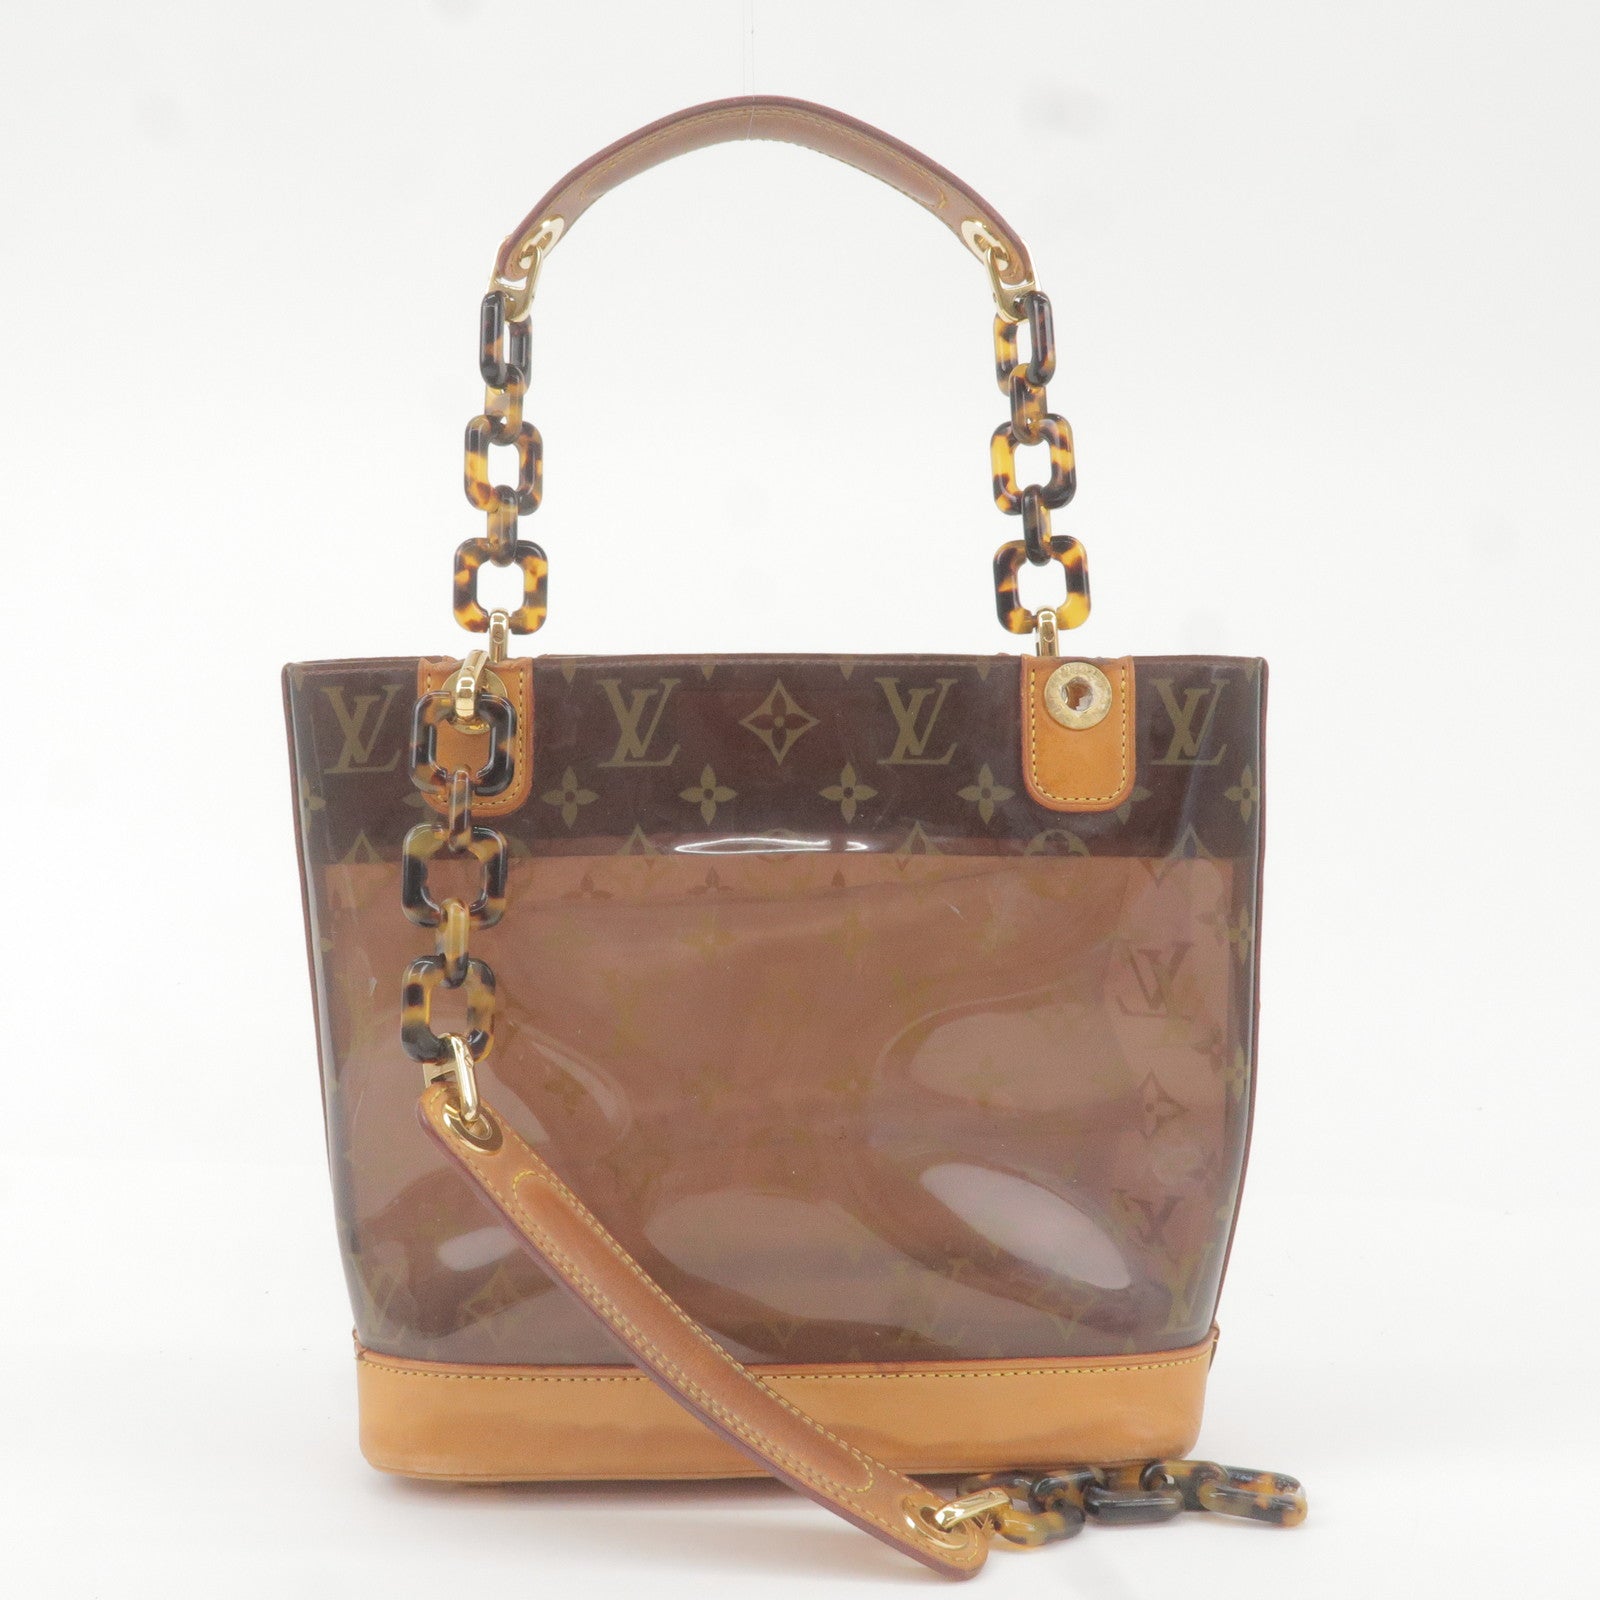 Authentic Gucci Vintage Bamboo Vinyl Hand Bag Handbag Clear Brown